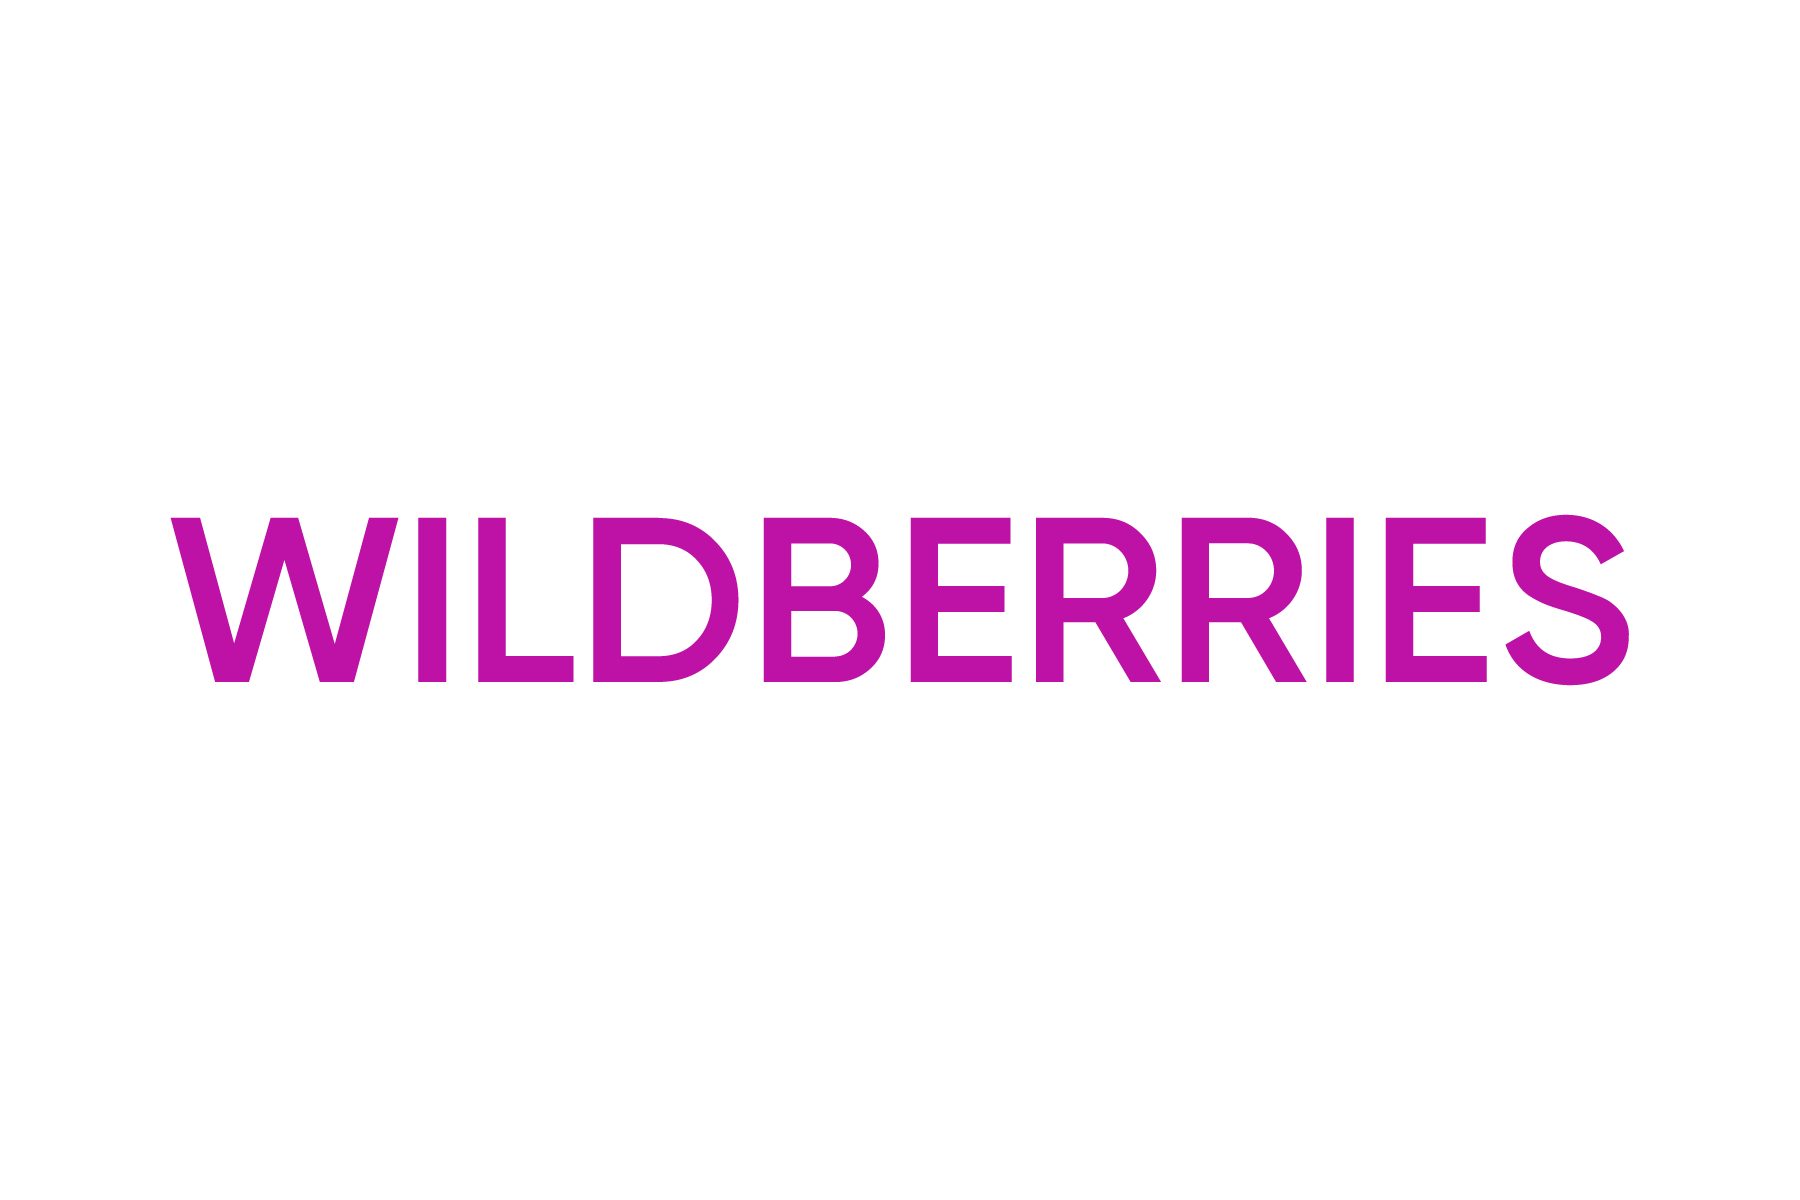 Вб е. Wildberries. Wildberries лого. Надпись Wildberries. Логотип ва.